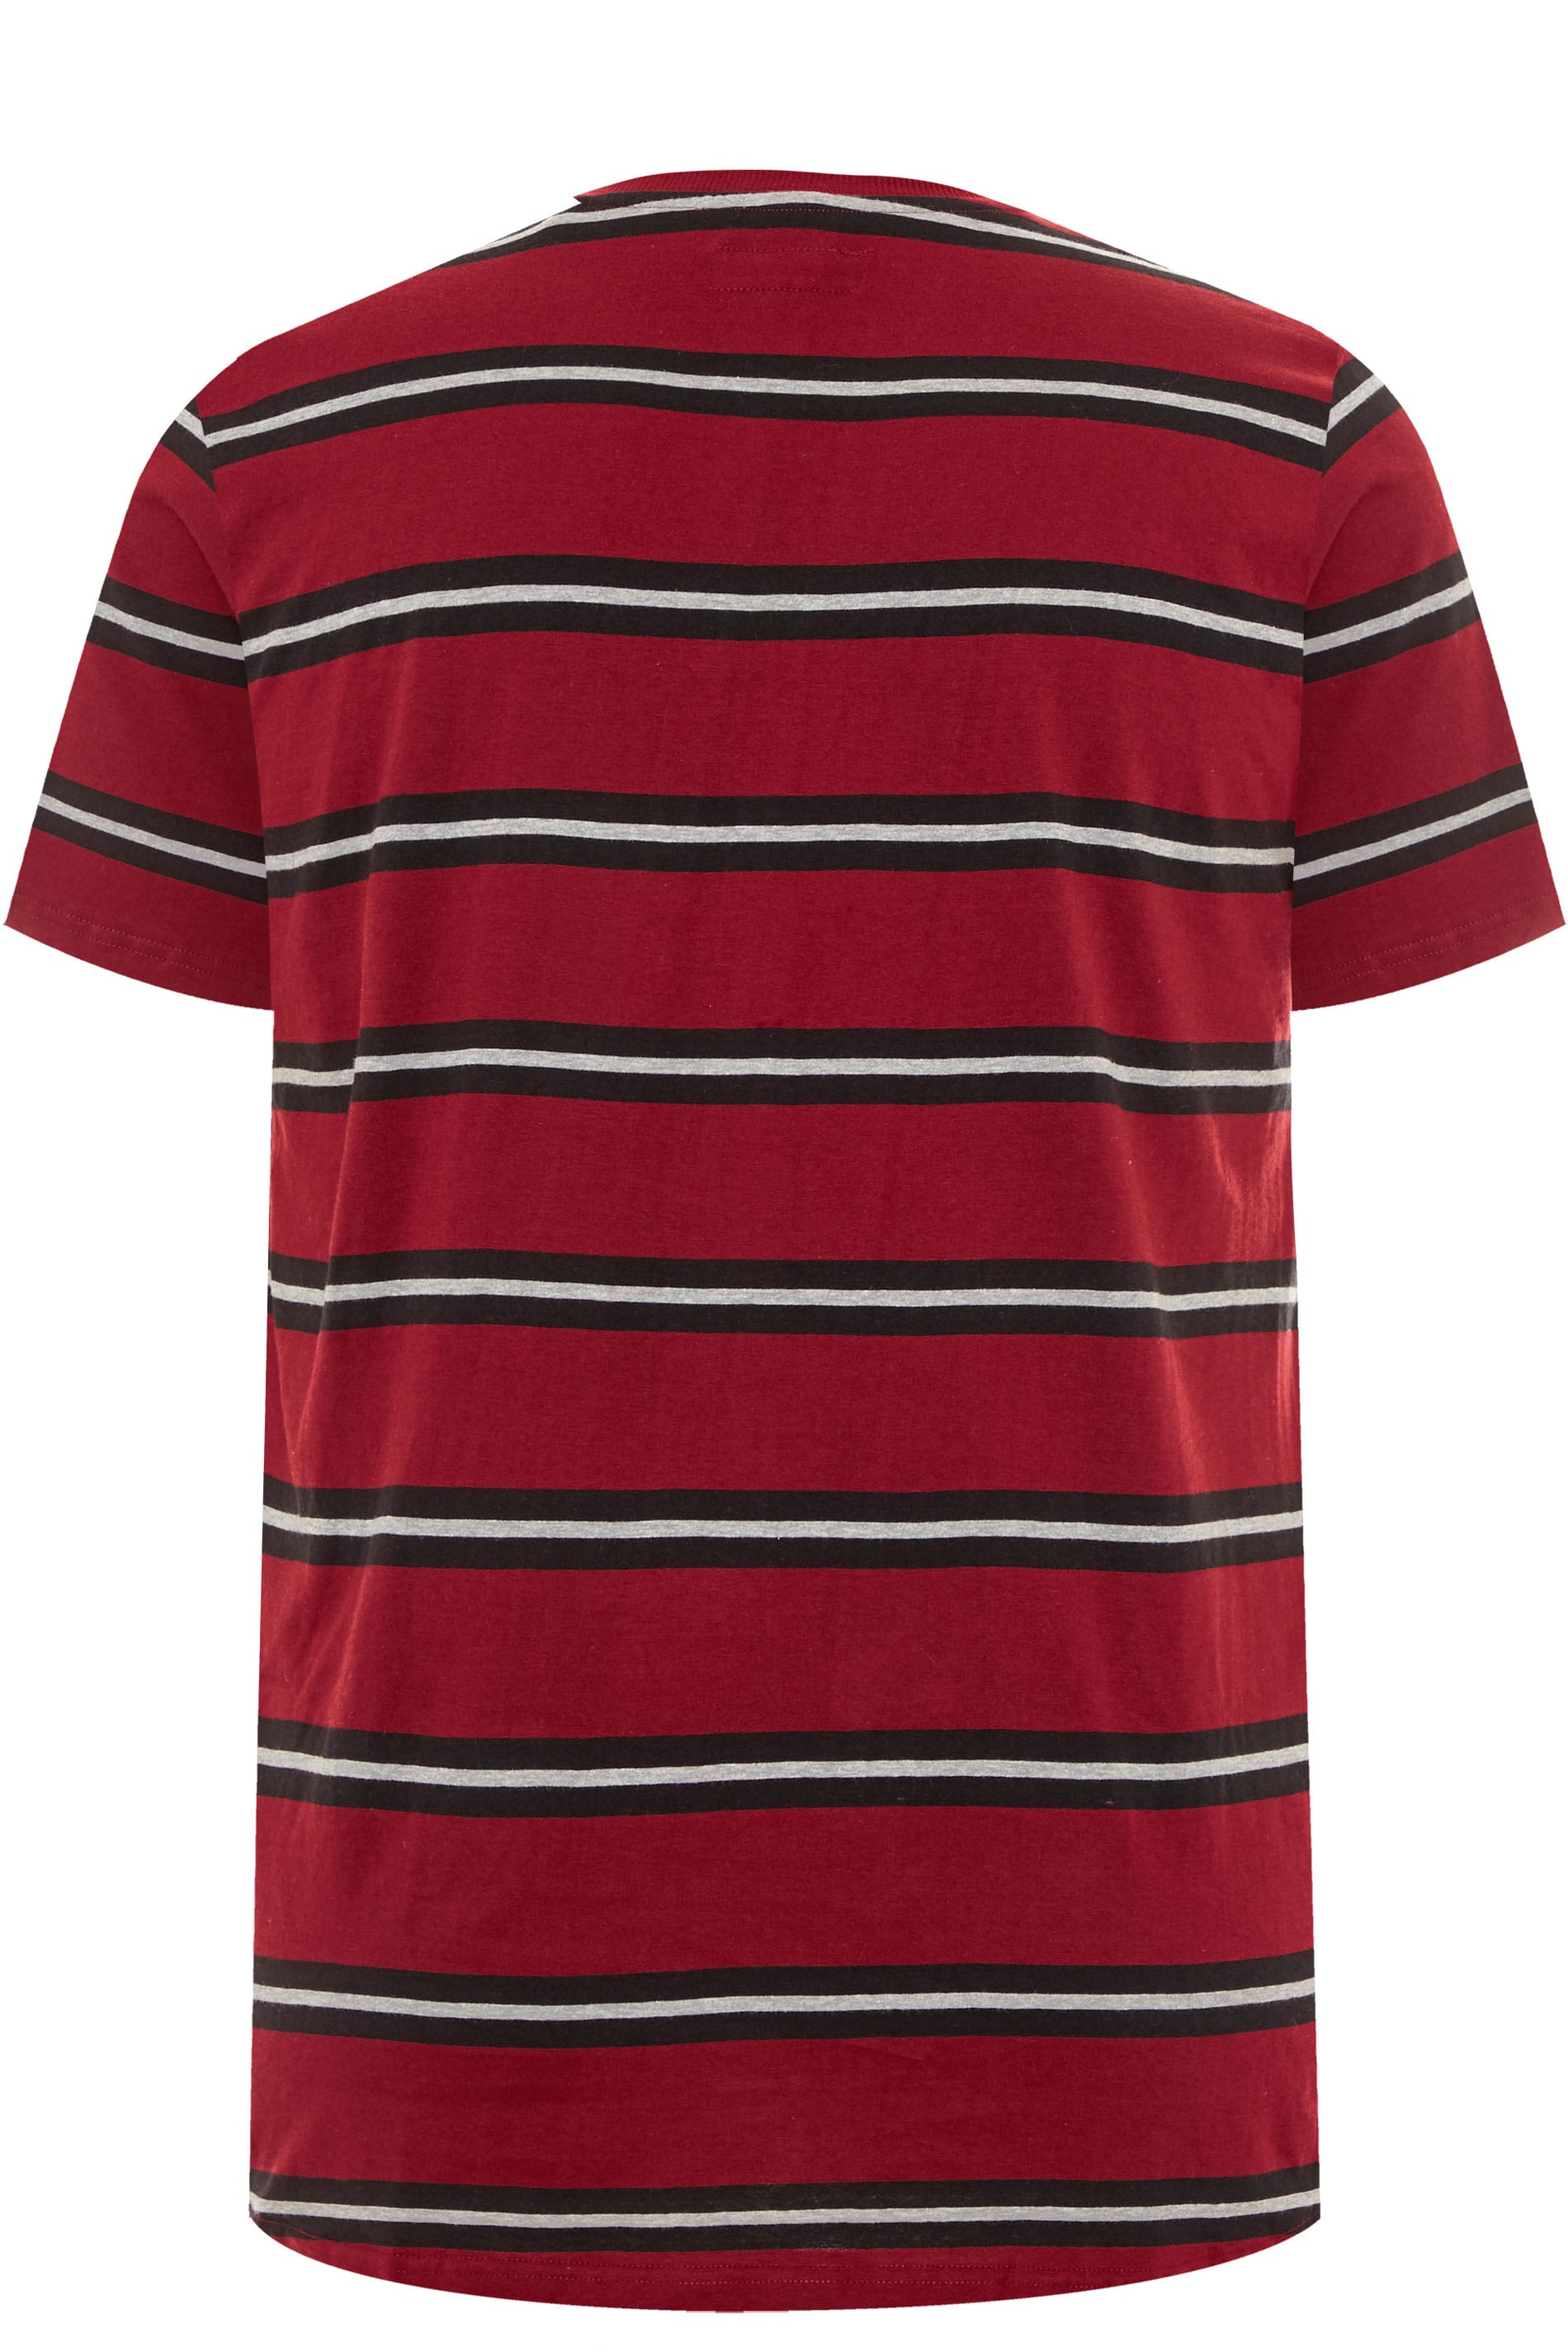 BadRhino Red Striped Grandad T-Shirt | BadRhino